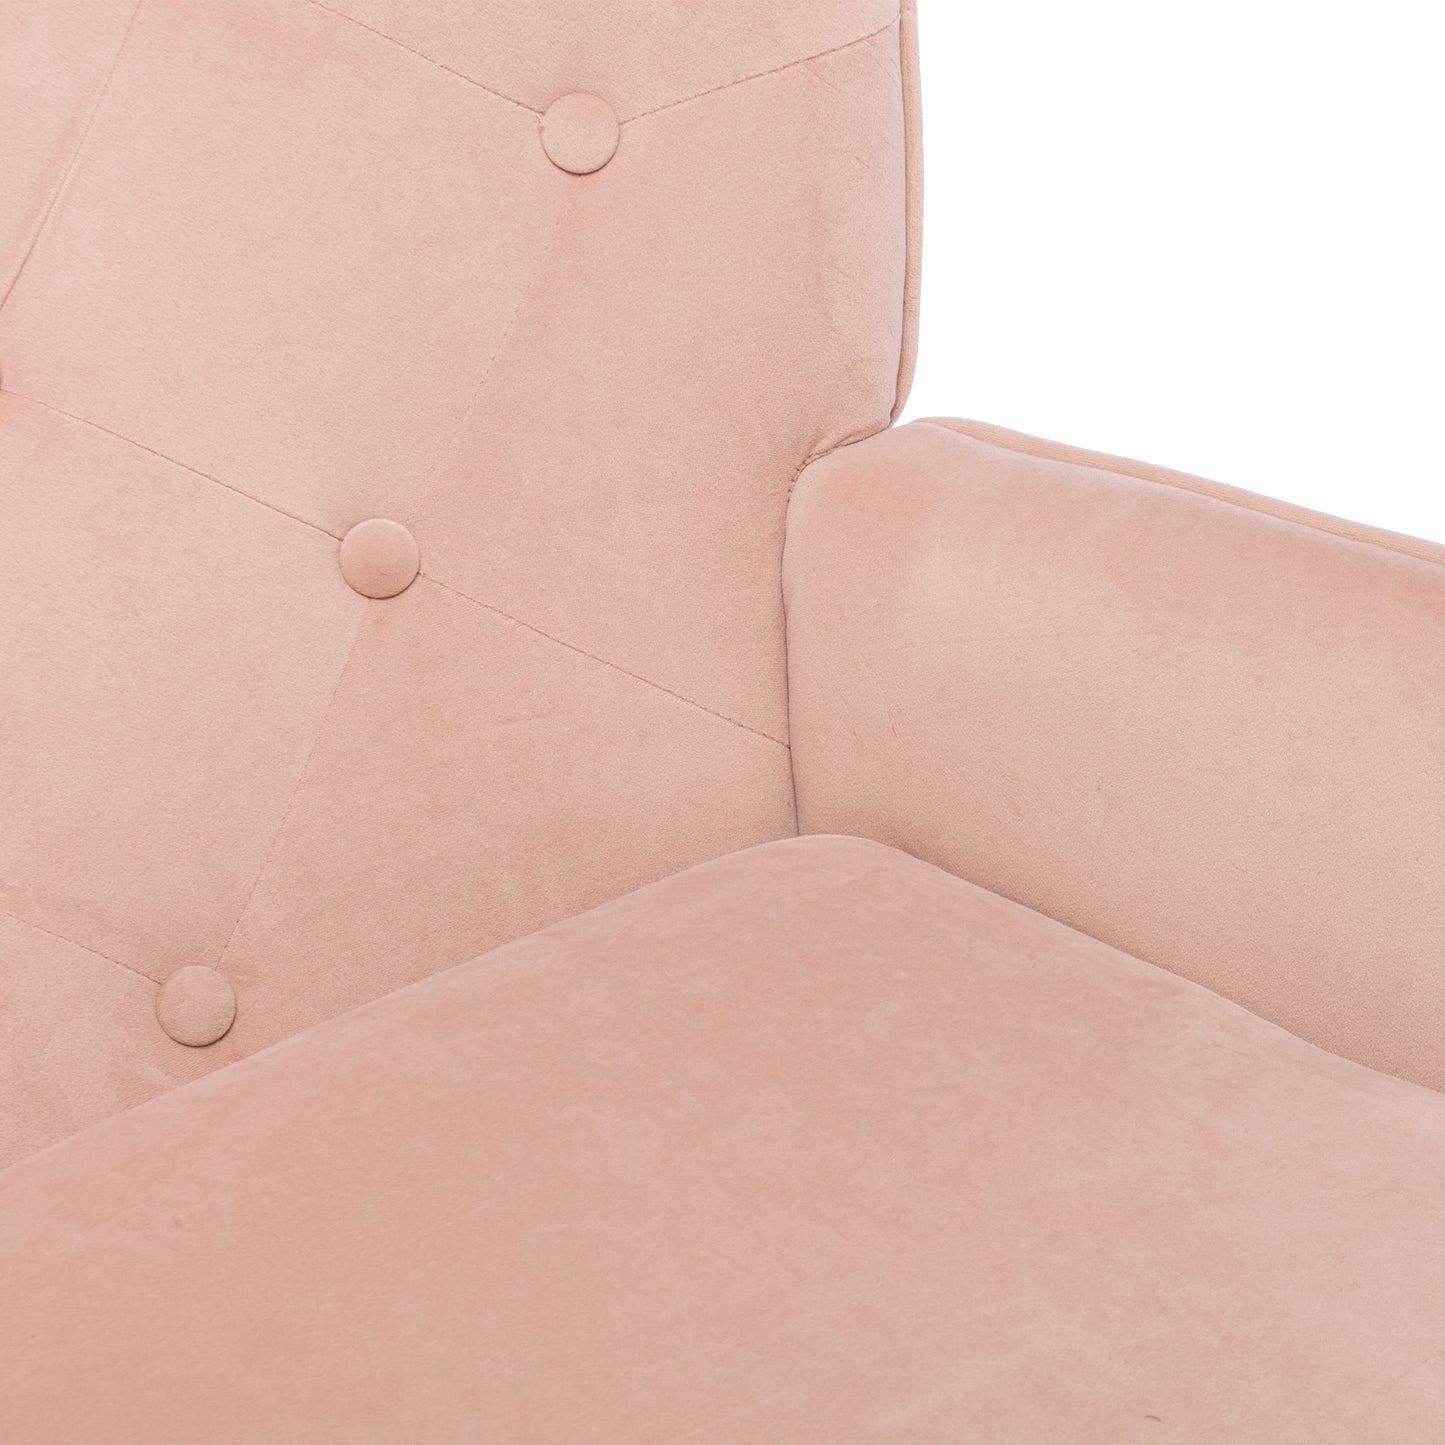 High Back Rocking Sofa Nursery Sofa .Comfortable Rocker Fabric Padded Seat .Modern High Back Arm-sofa